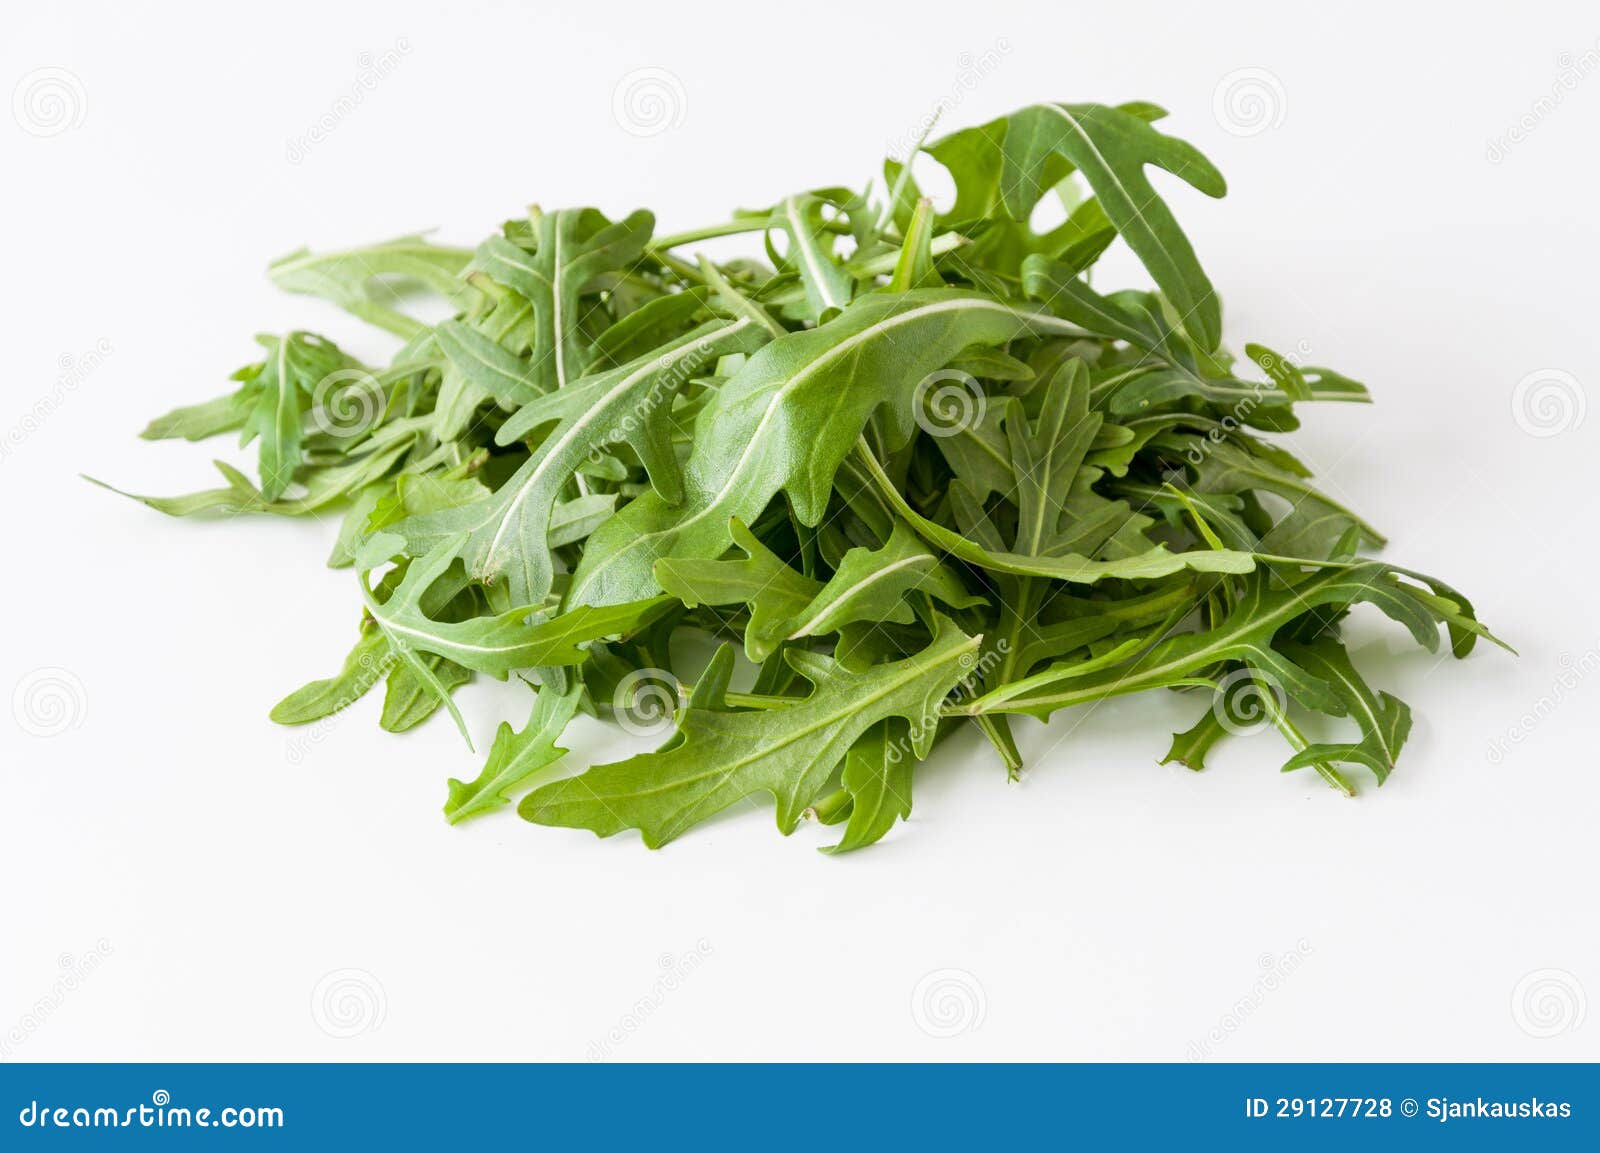 rucola lettuce